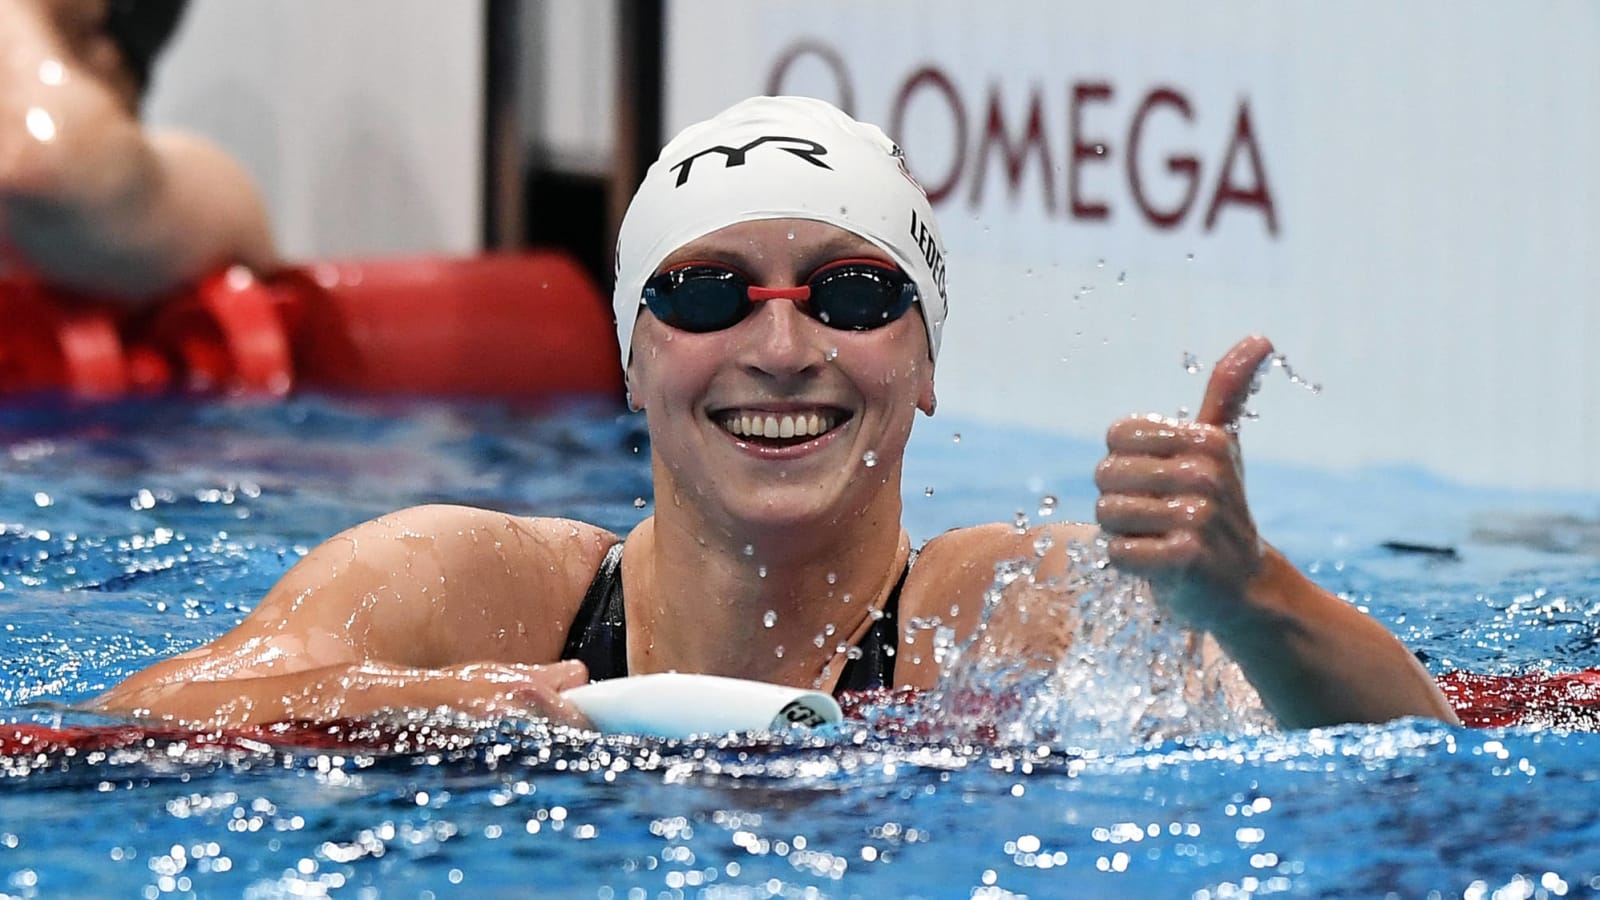 After latest gold medal, Katie Ledecky shoots down retirement talk 